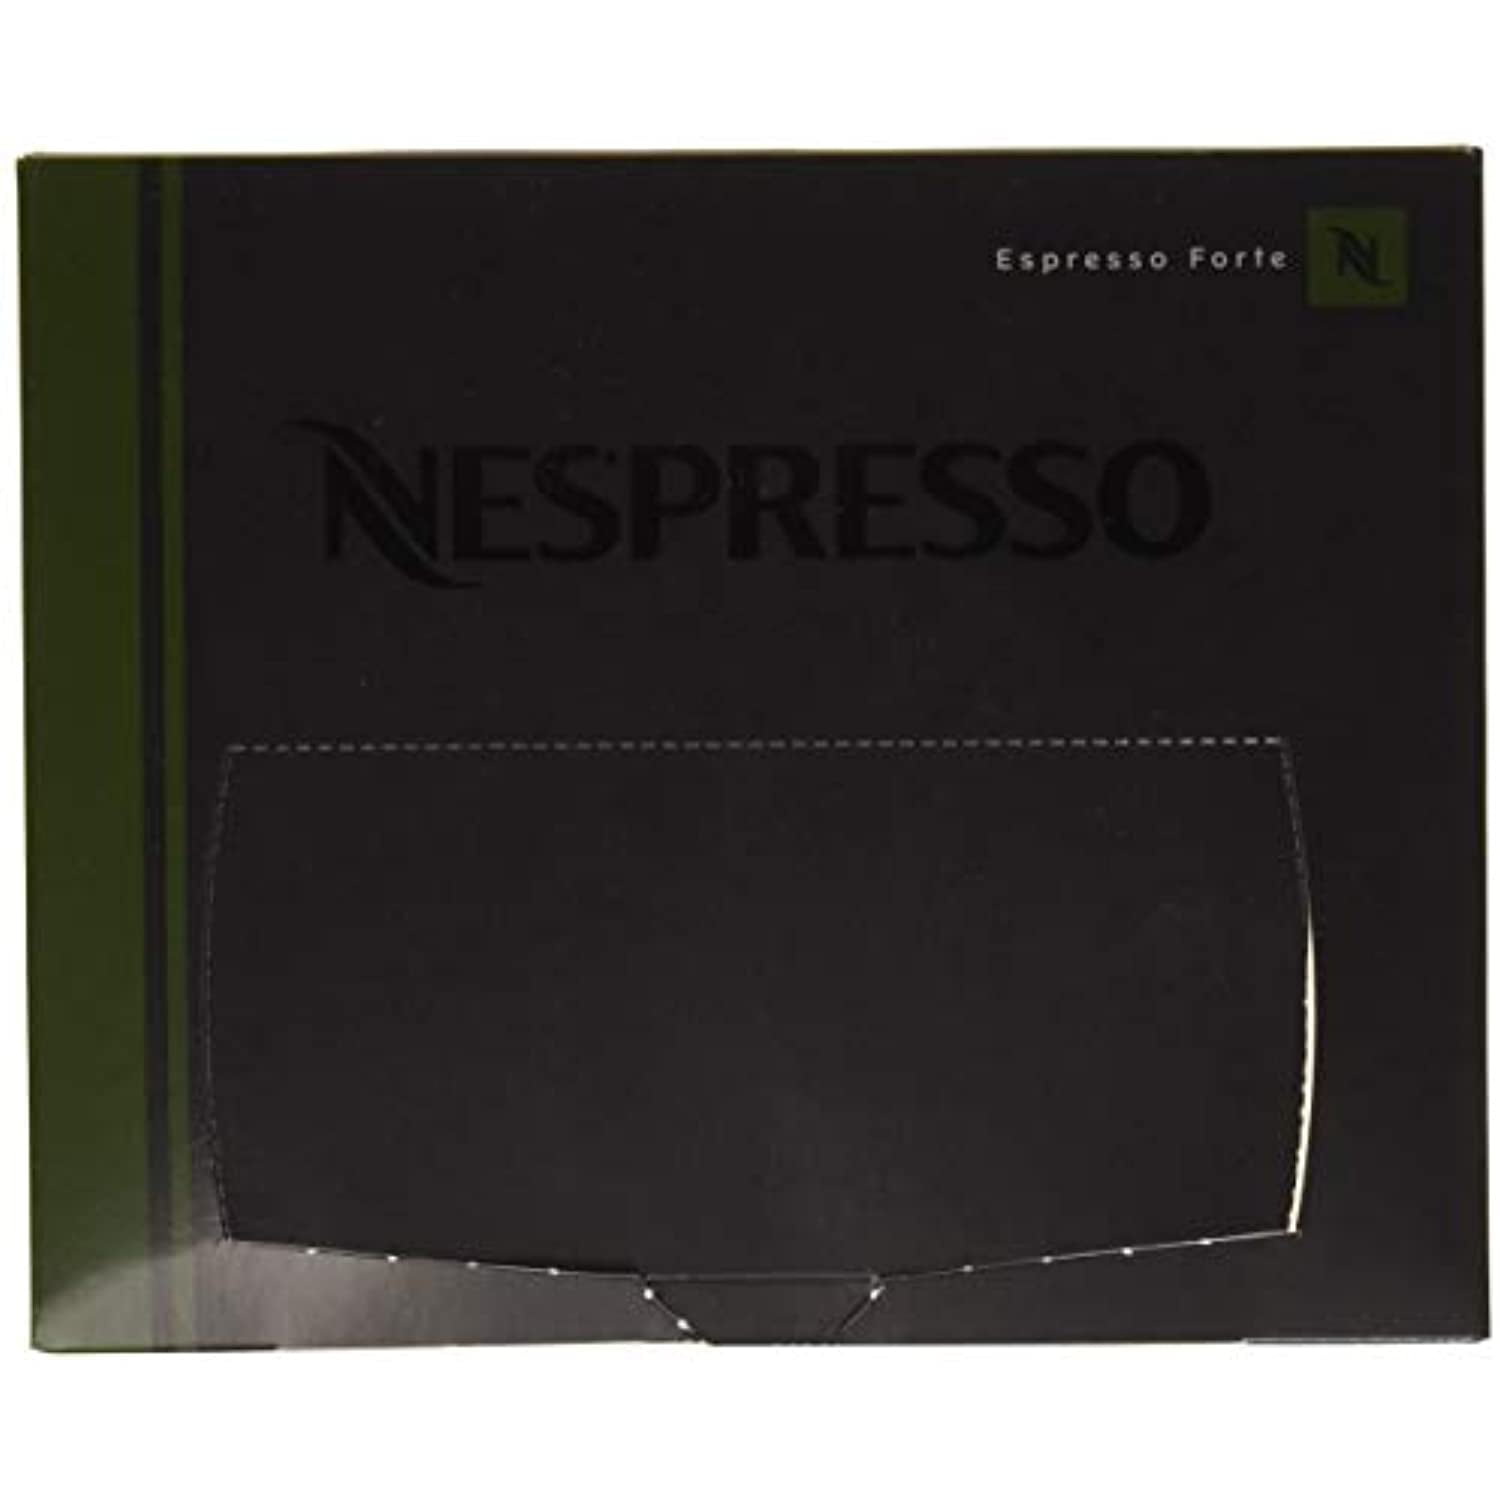 Espresso Forte capsules Nespresso PRO Natfood coffee system 50 pieces  Natfood